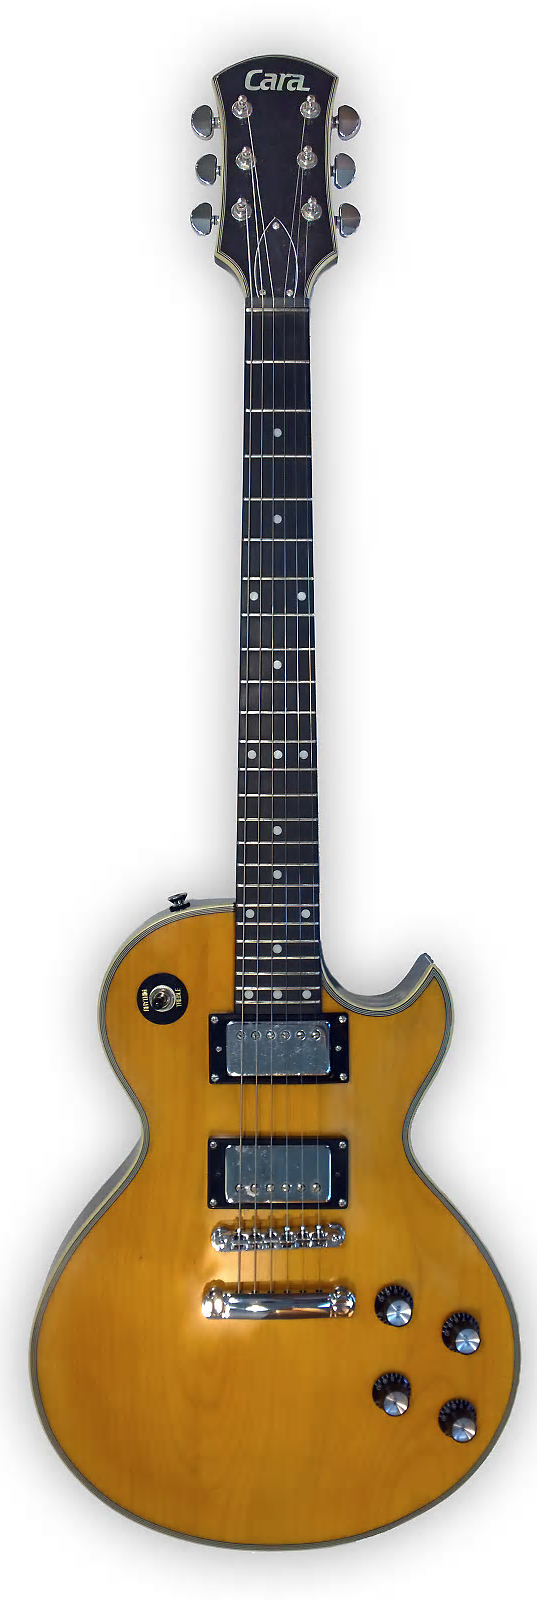 Cara 10th Avenue Solid Body Guitar